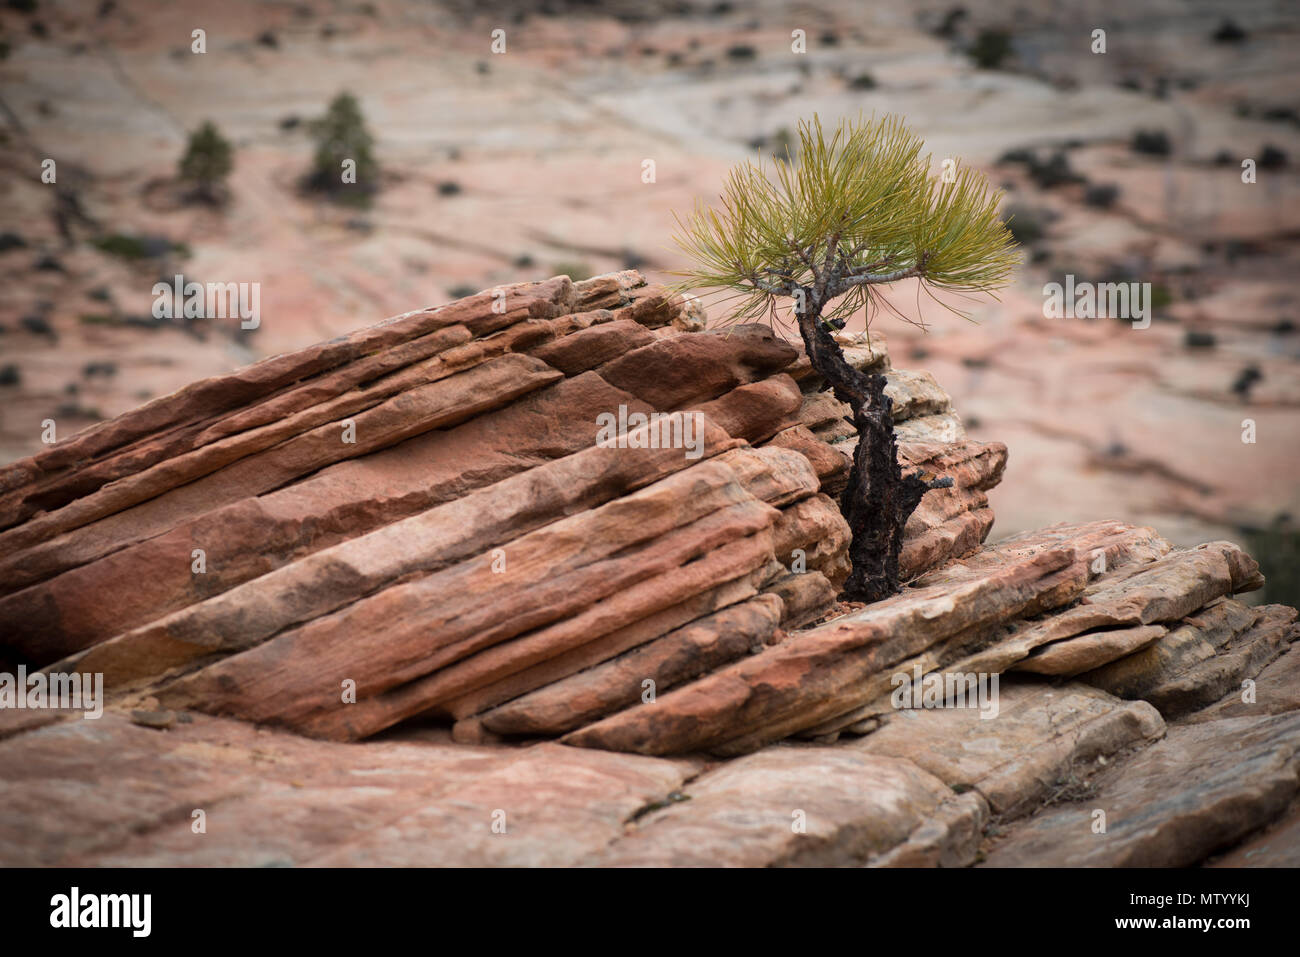 Sapling growing in sandstone rocks, Utah, United States Stock Photo